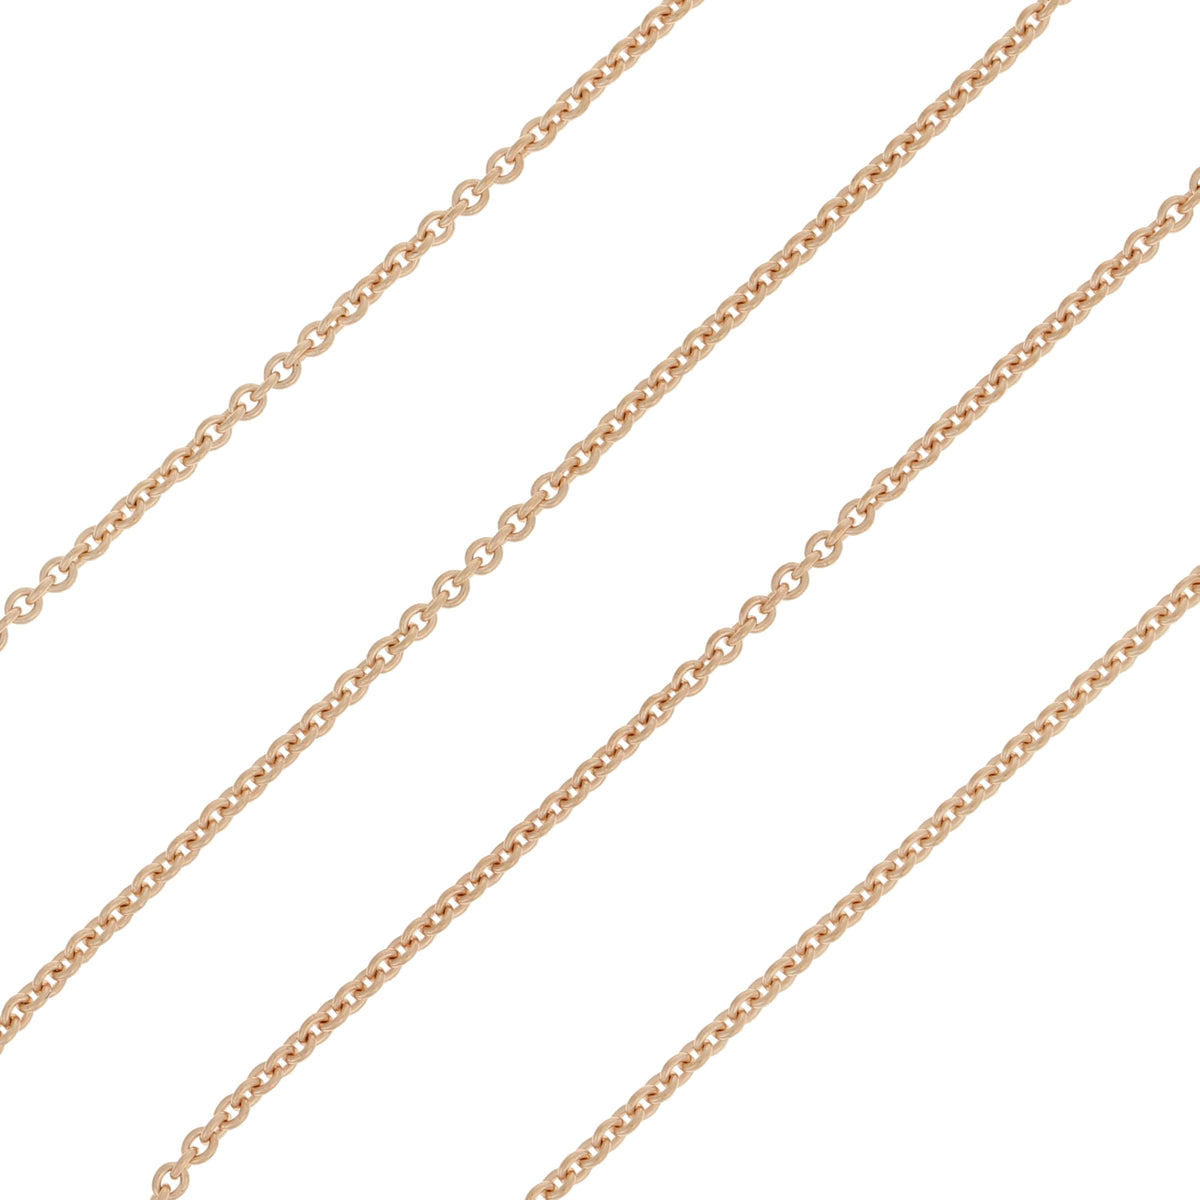 Rose Gold Diamond Bar Necklace